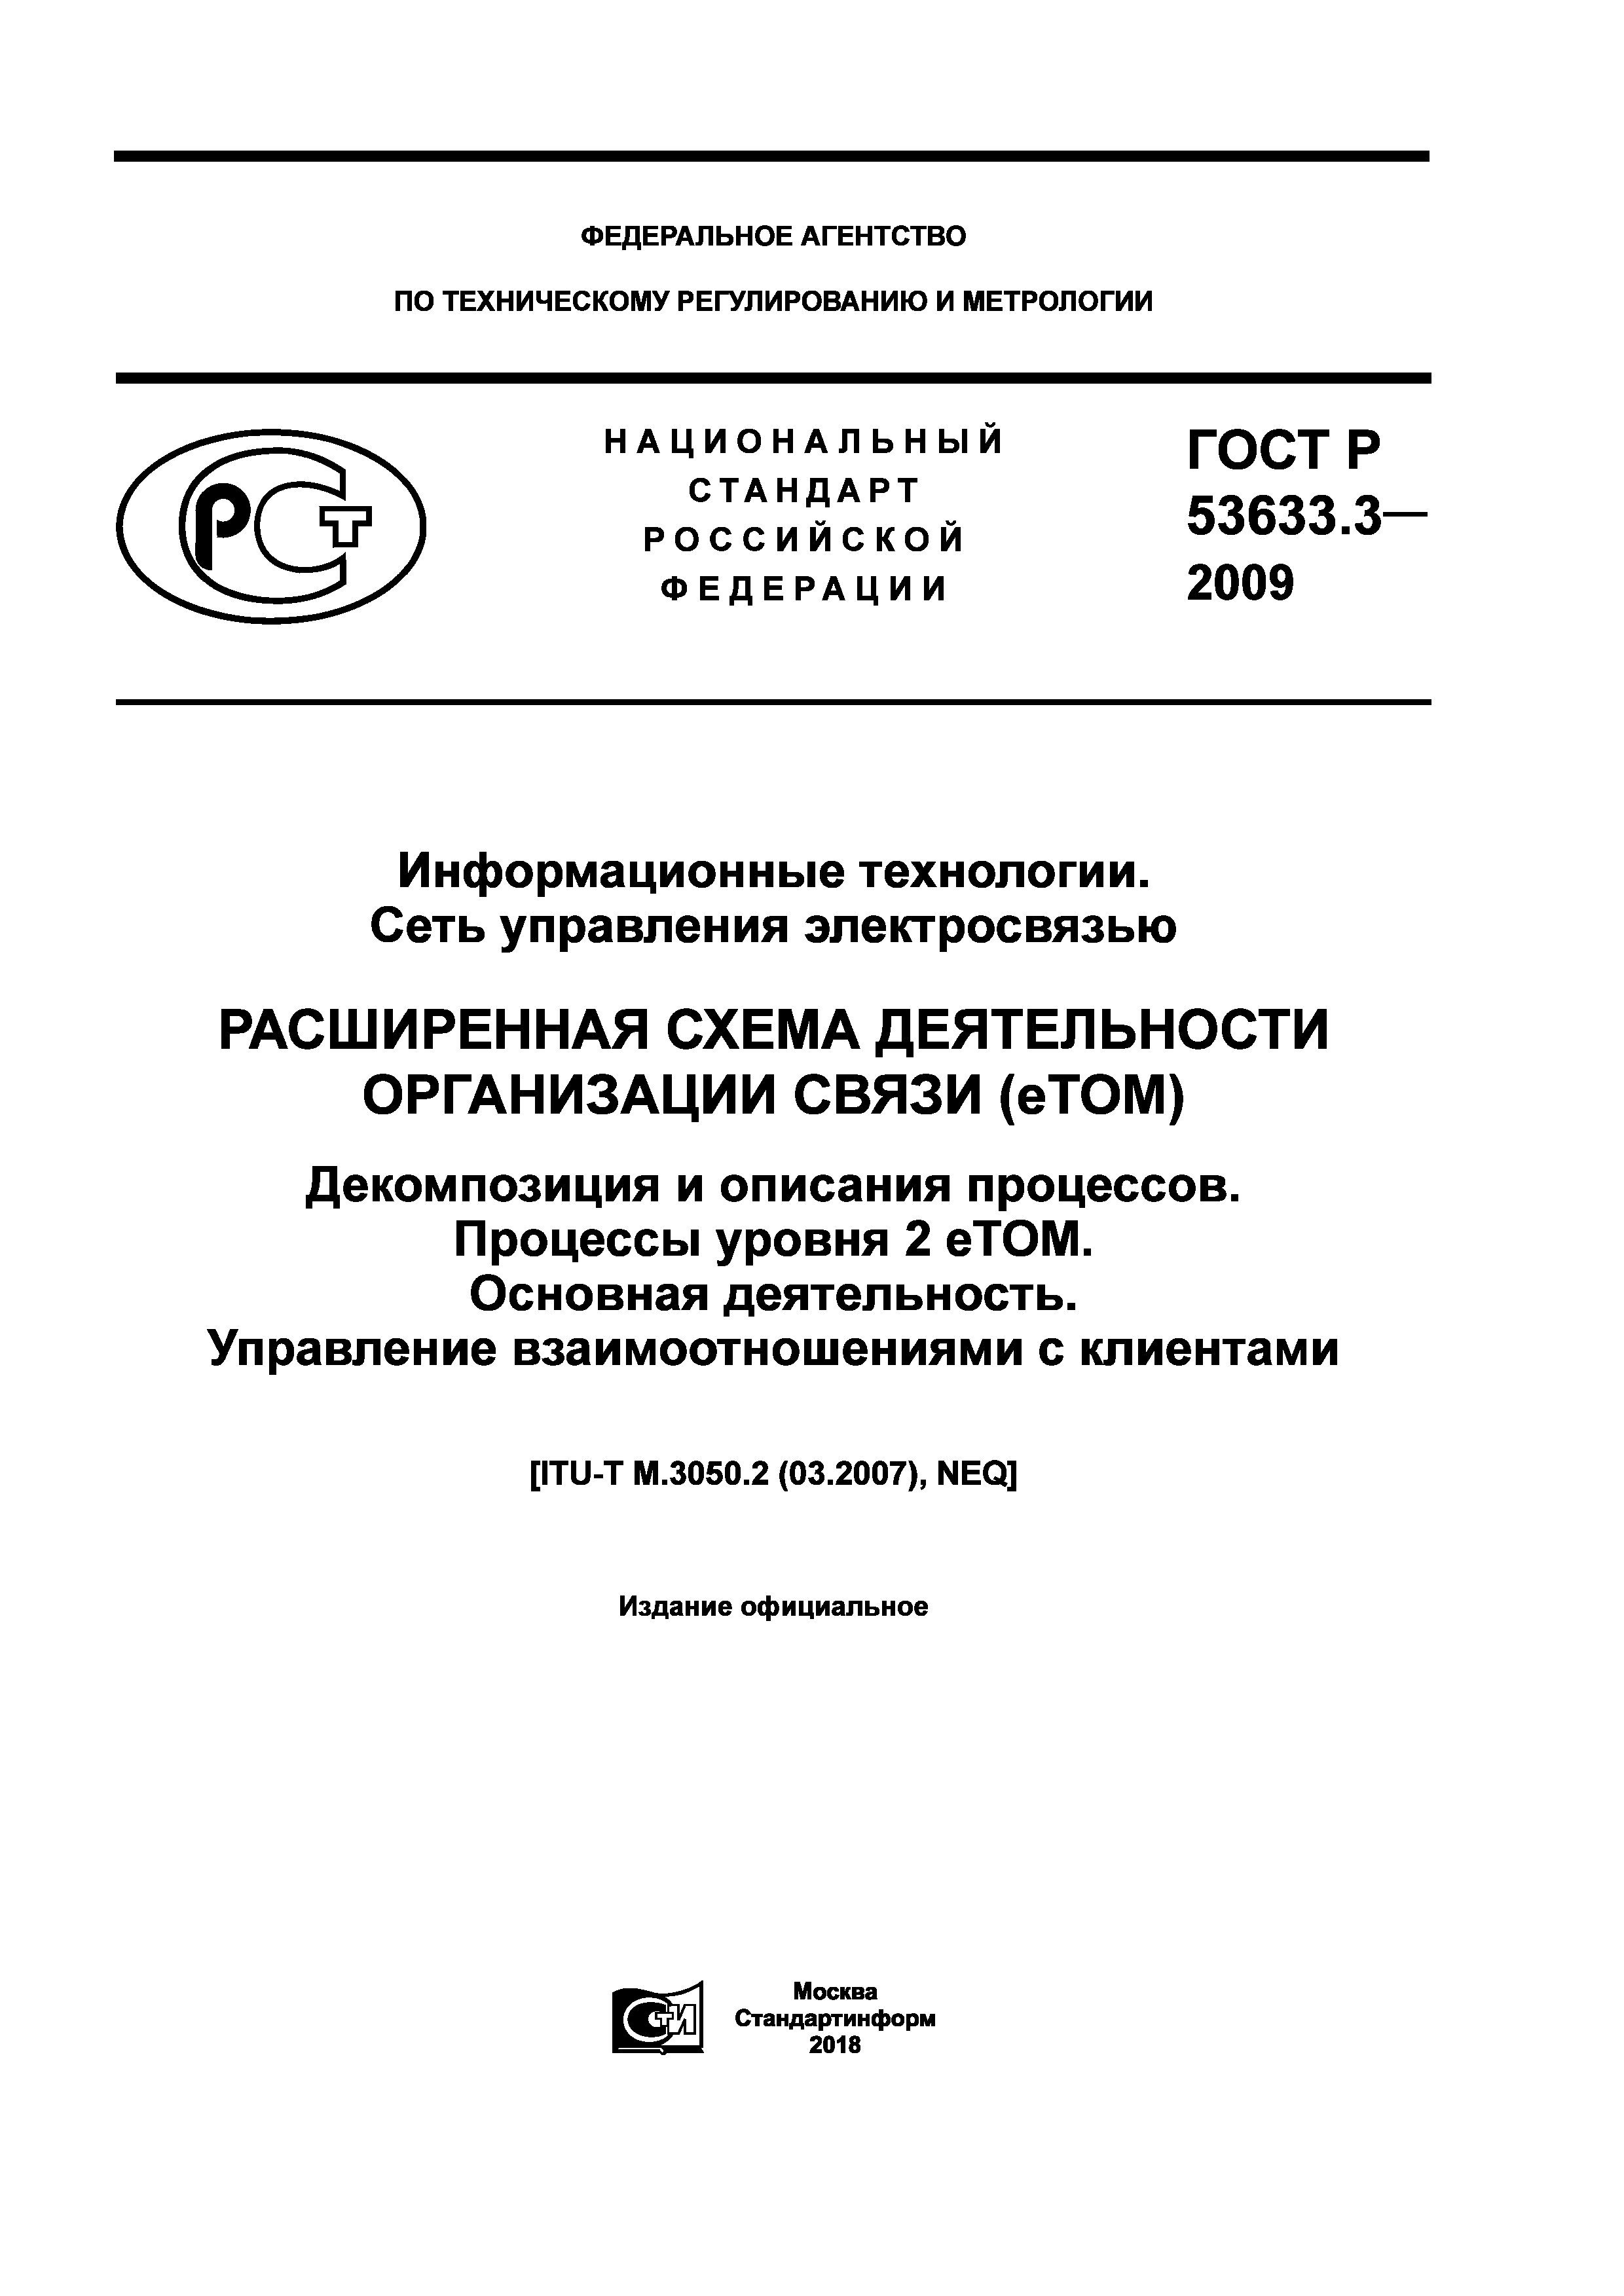 ГОСТ Р 53633.3-2009